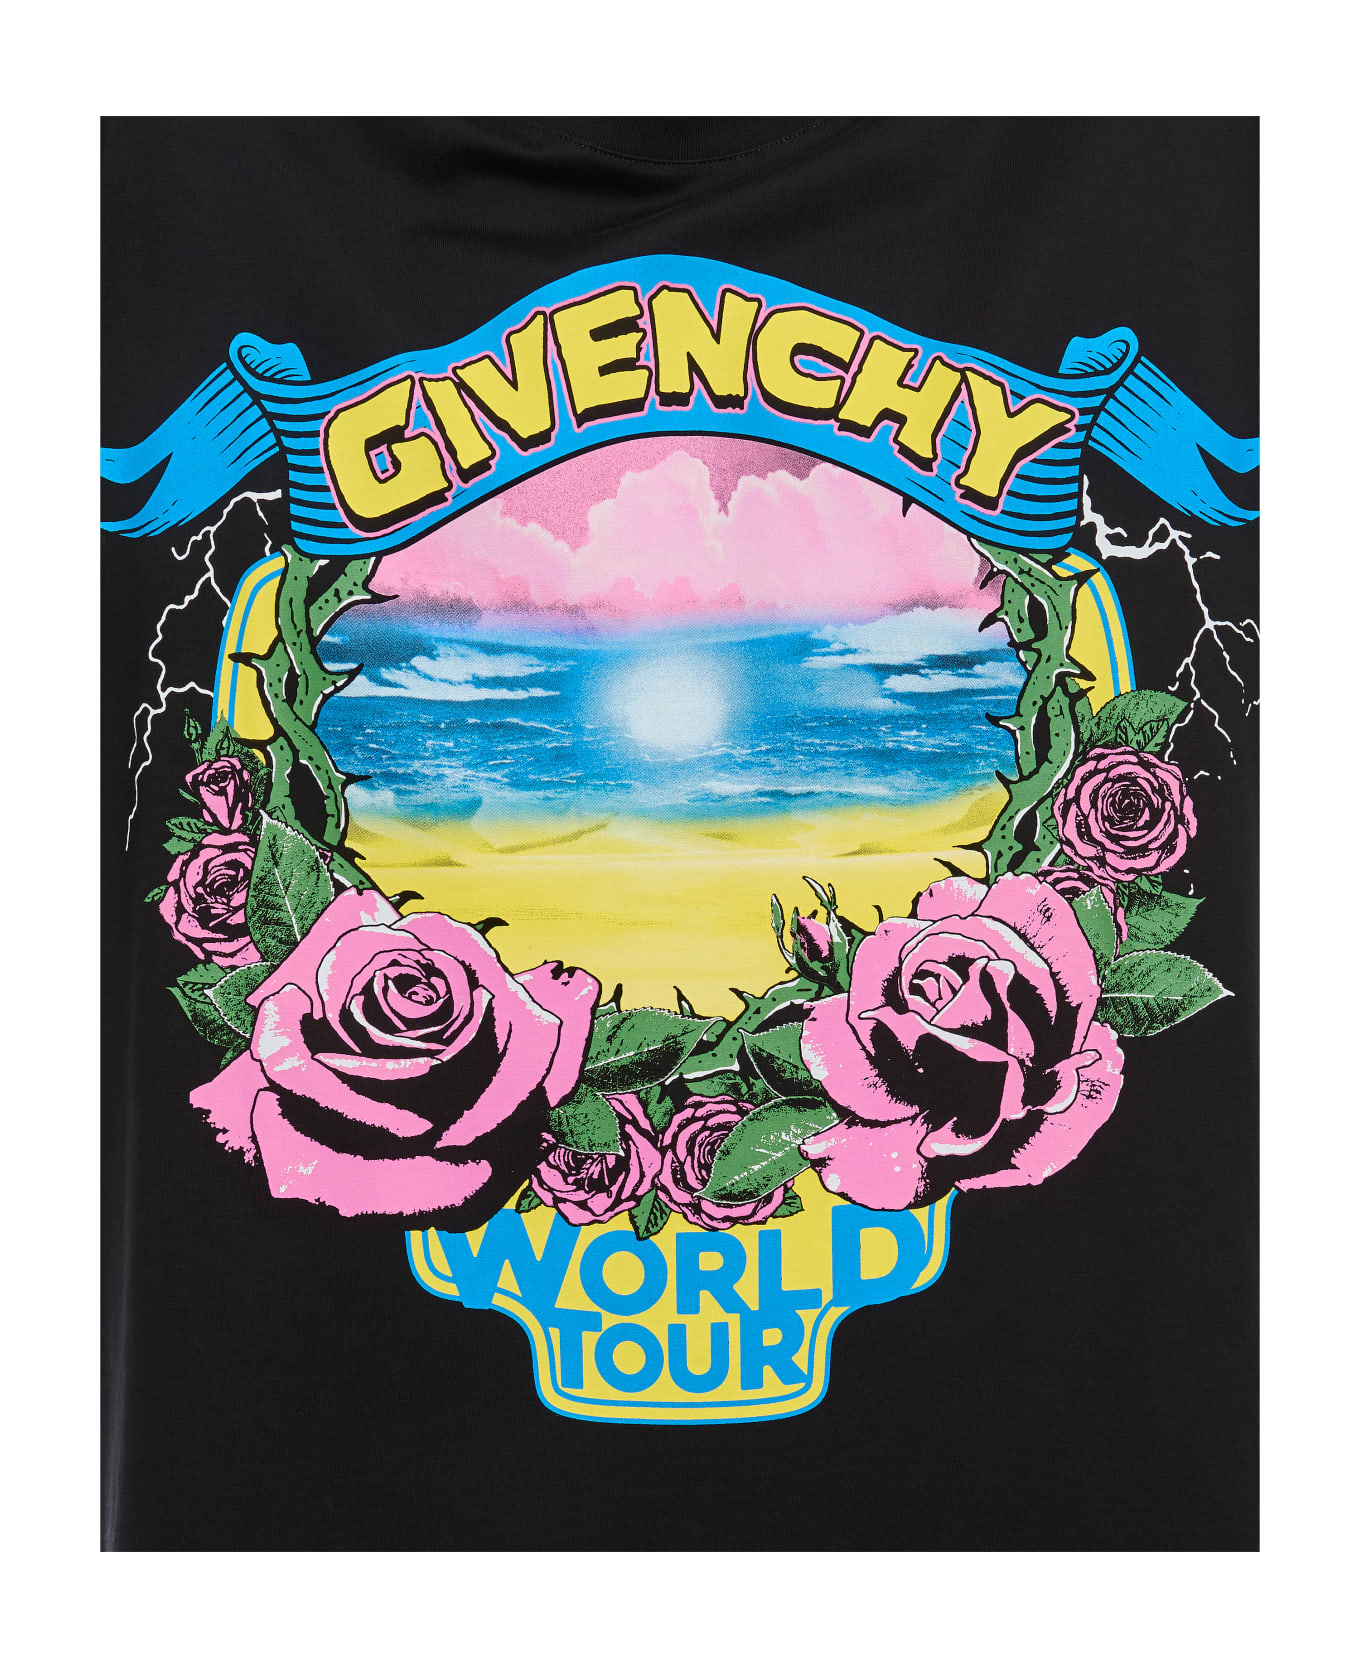 Givenchy Cotton T-shirt - Black シャツ